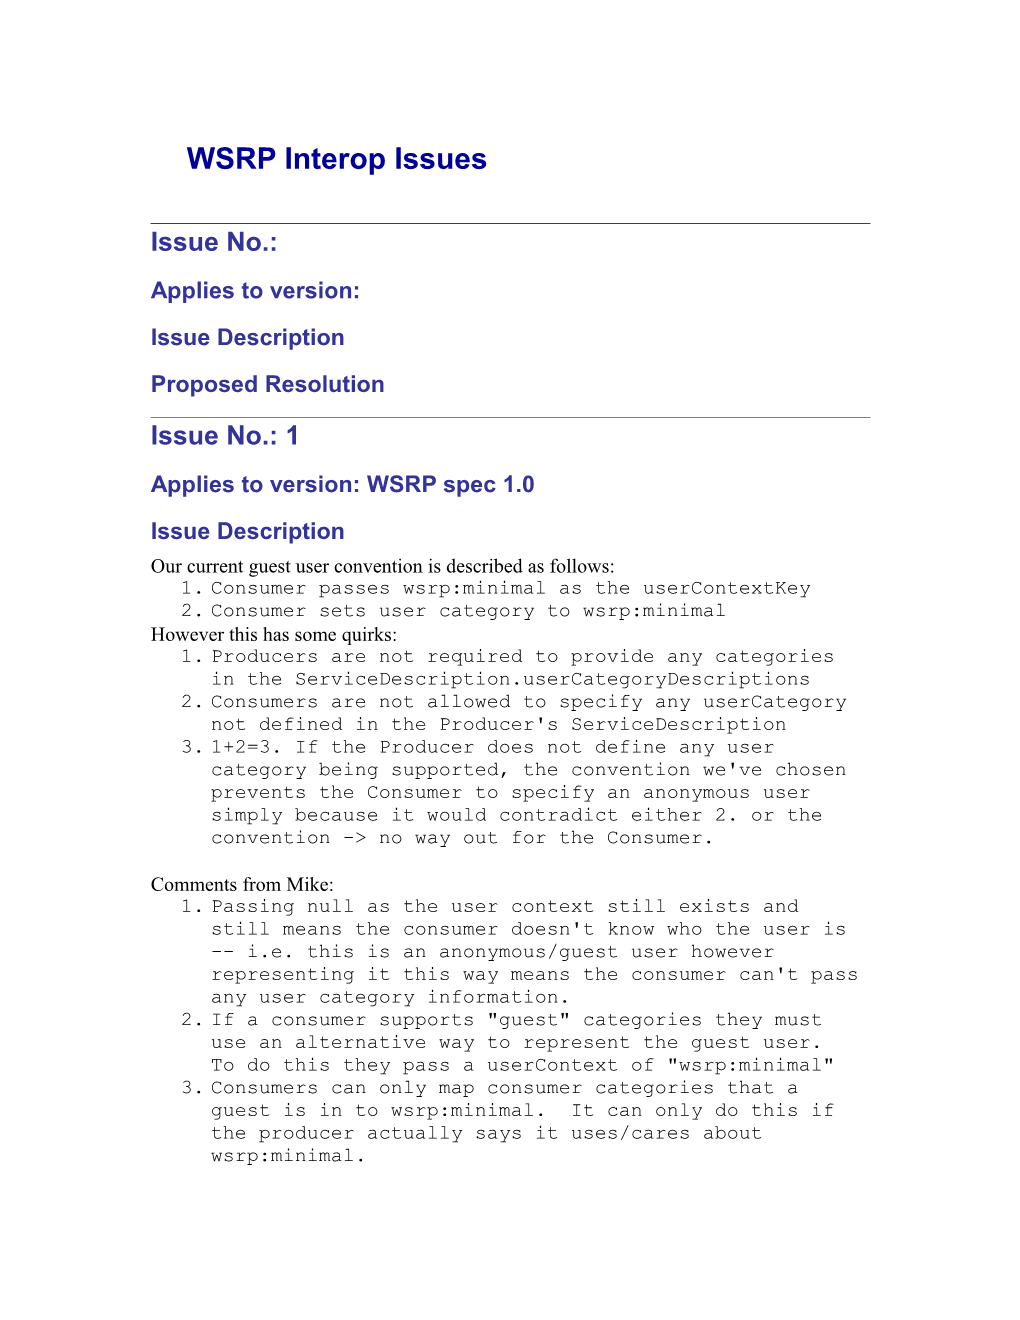 WSRP UDDI Tech Note Issues